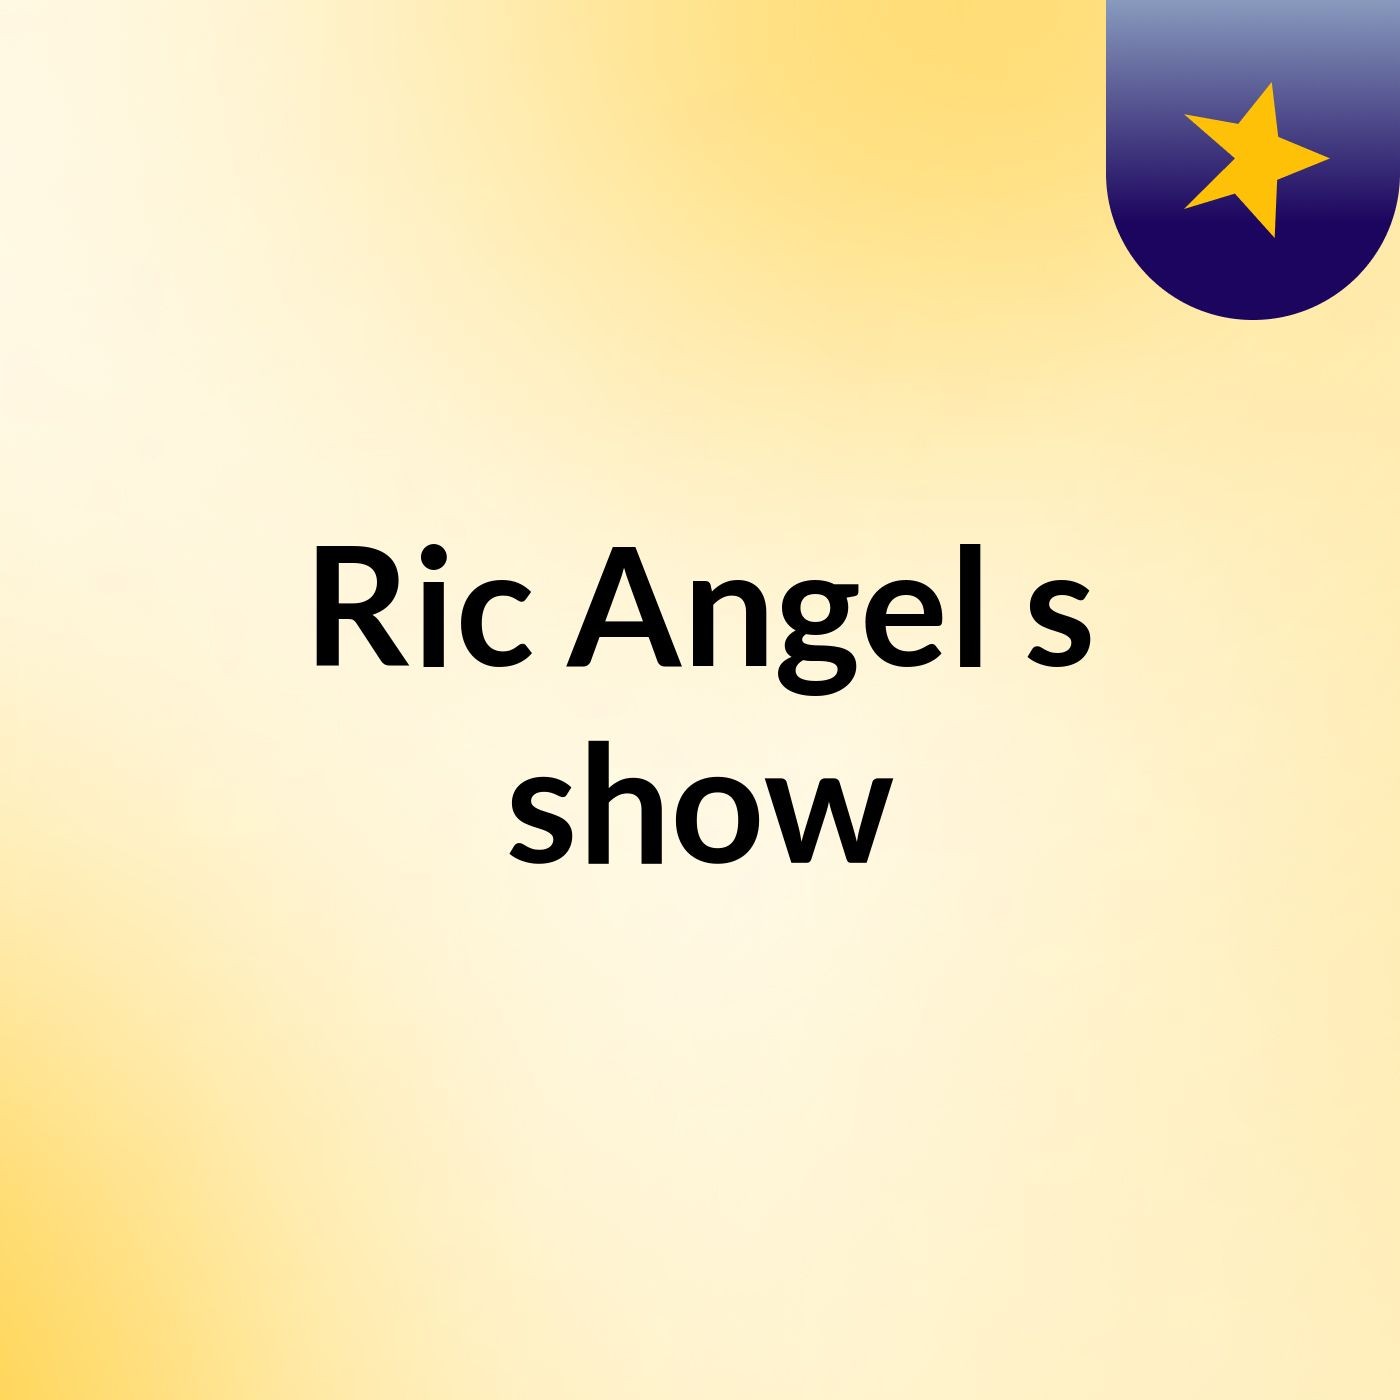 Ric Angel's show